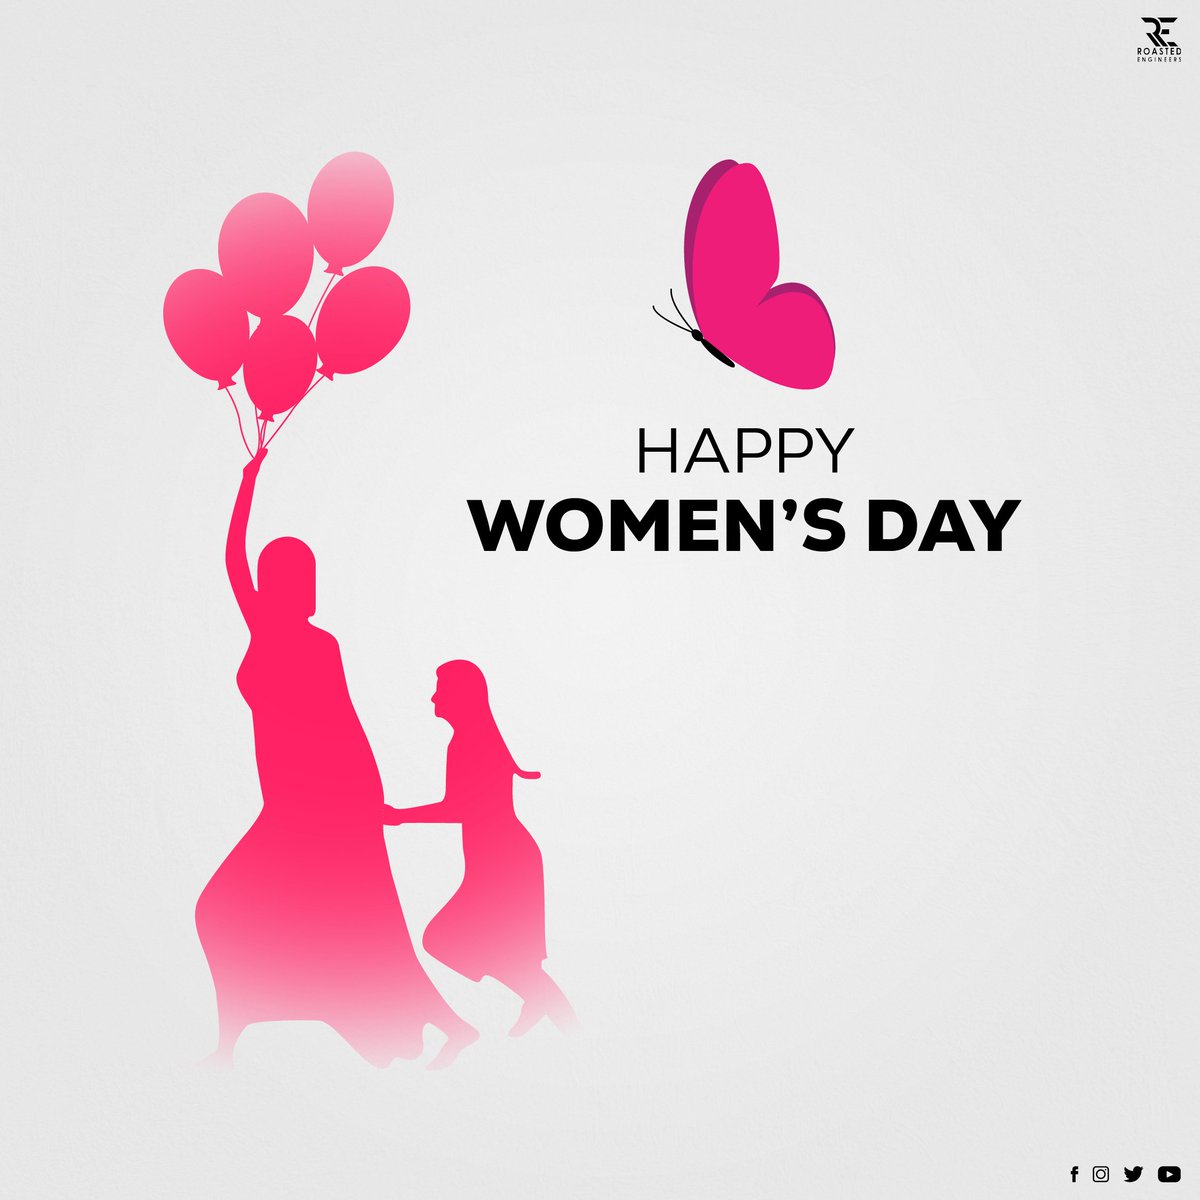 Happy International Women's Day! Let's celebrate the incredible achievements of women. 

#IWD2023 #InternationalWomensDay #ChooseToChallenge #WomenEmpowerment #feminismo #WomenSupportingWomen #EachForEqual #GirlPower #WomenInLeadership #BalanceForBetter #roasted_engineers